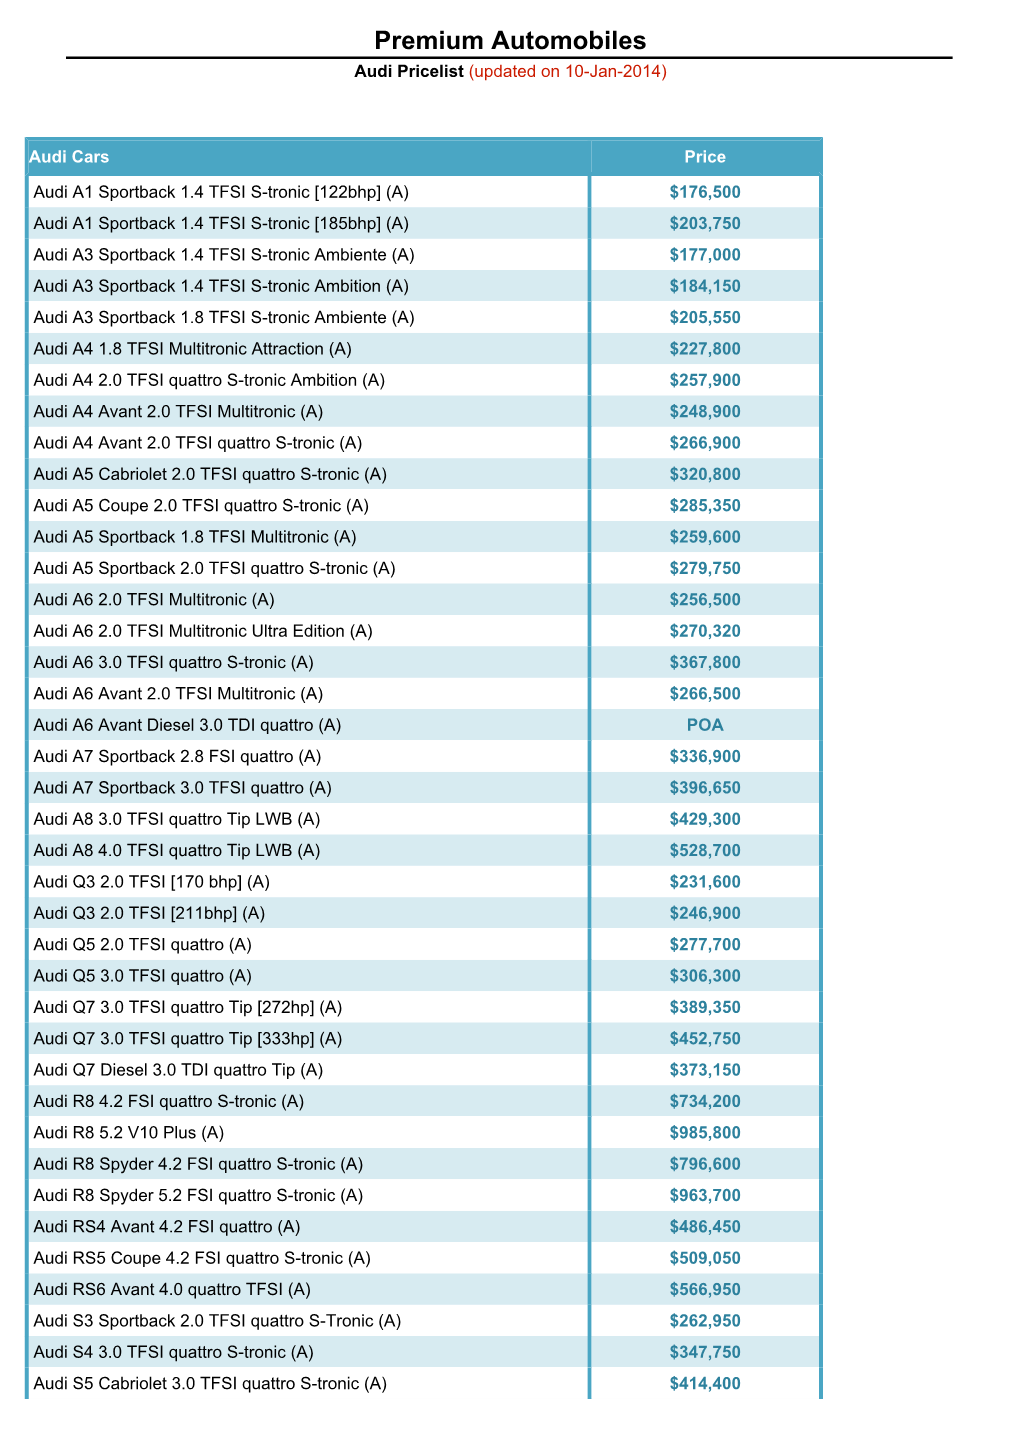 Premium Automobiles Audi Pricelist (Updated on 10-Jan-2014)